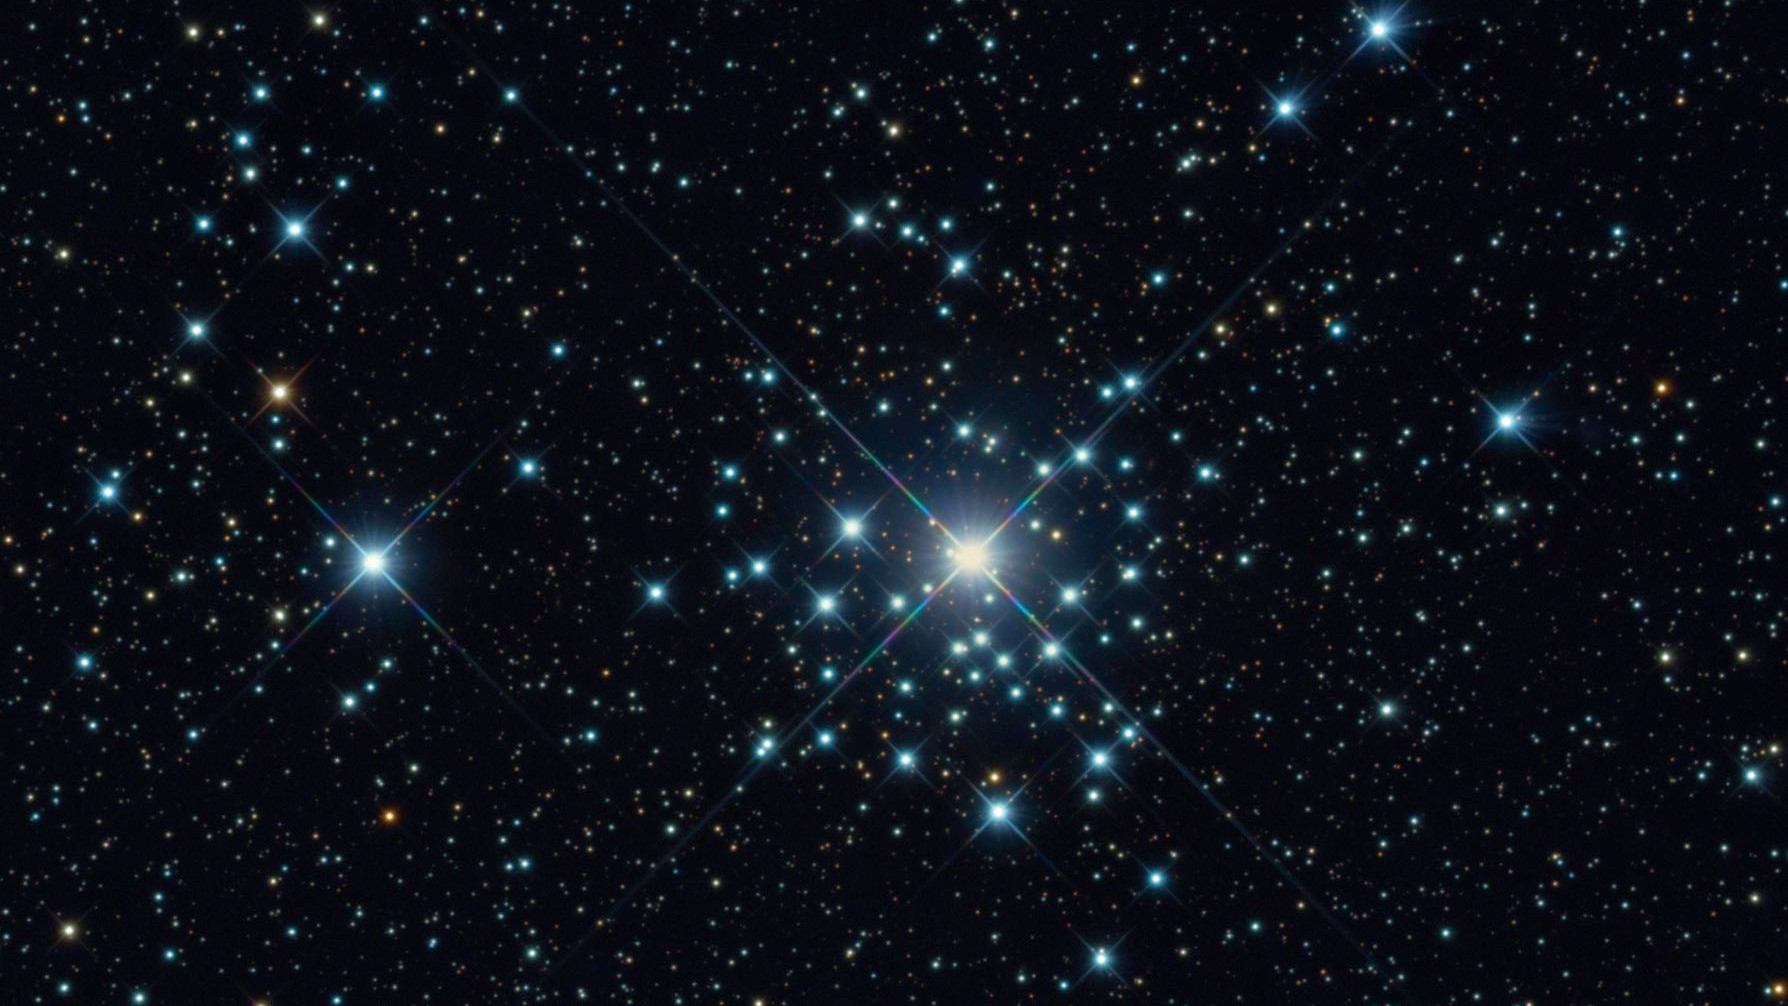 NGC 2362 - The Tau Canis Majoris cluster